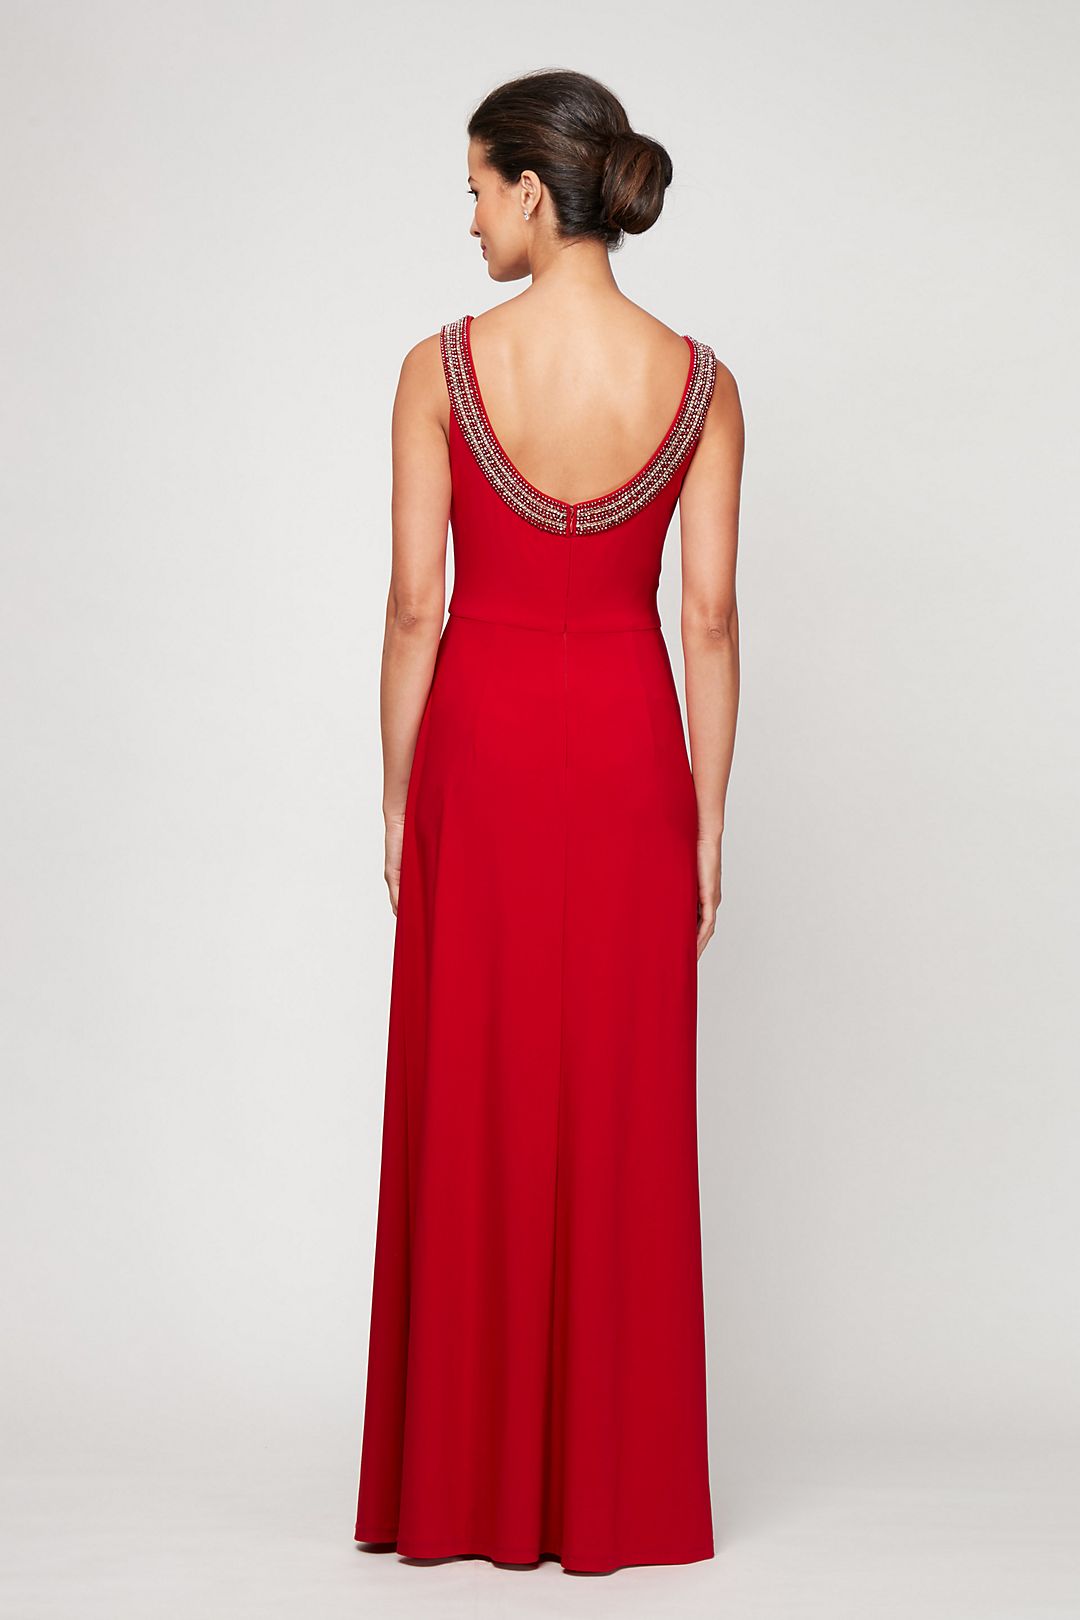 Beaded Sleeveless Scoopback A-Line Jersey Dress Image 3